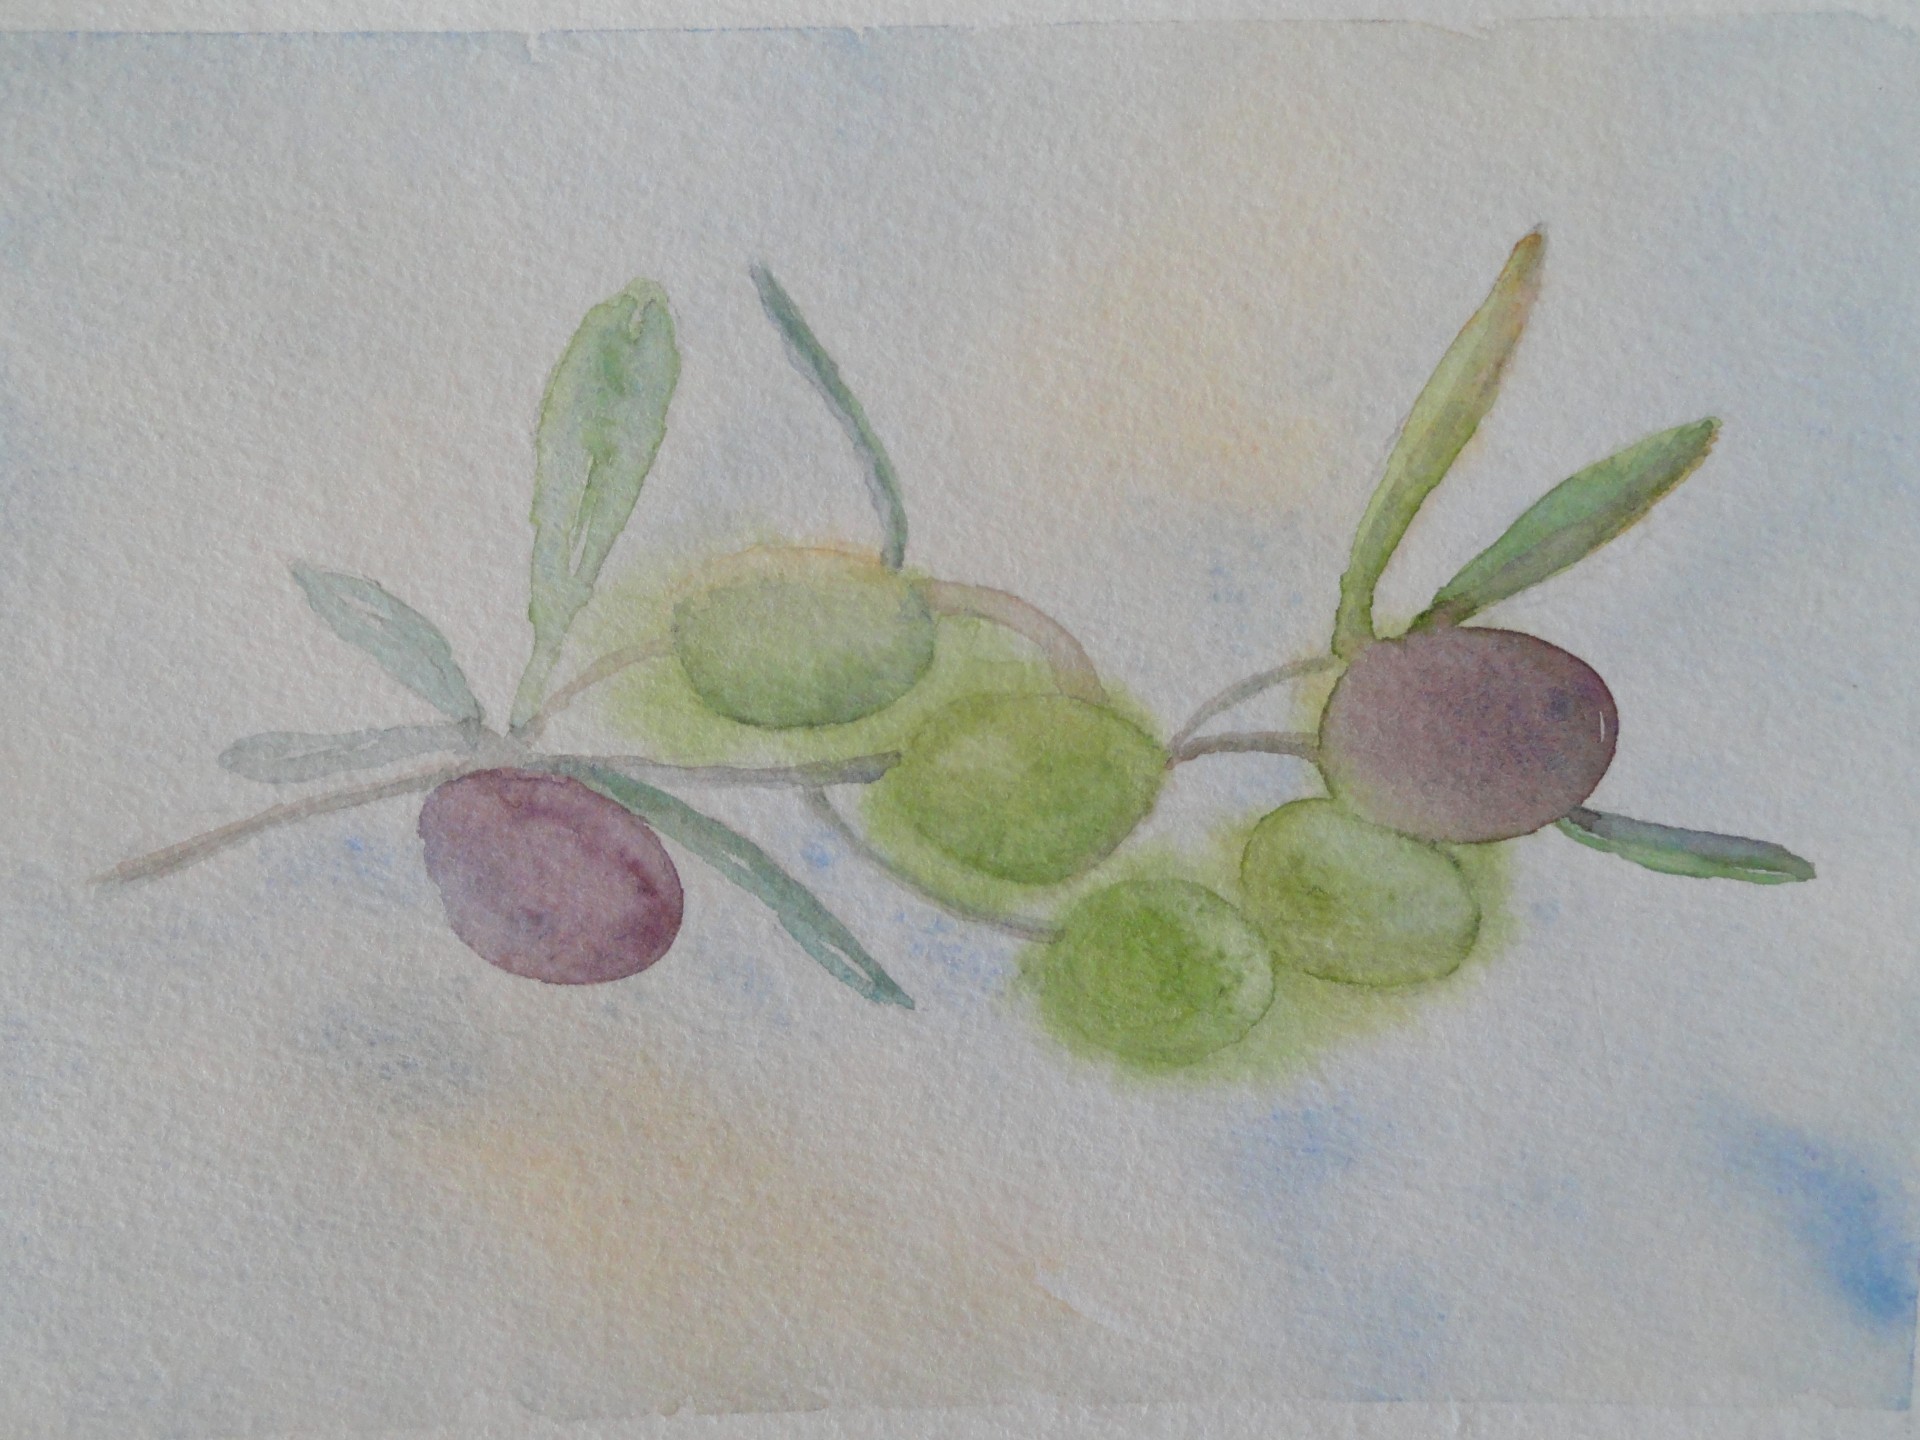 rameau d'olivier